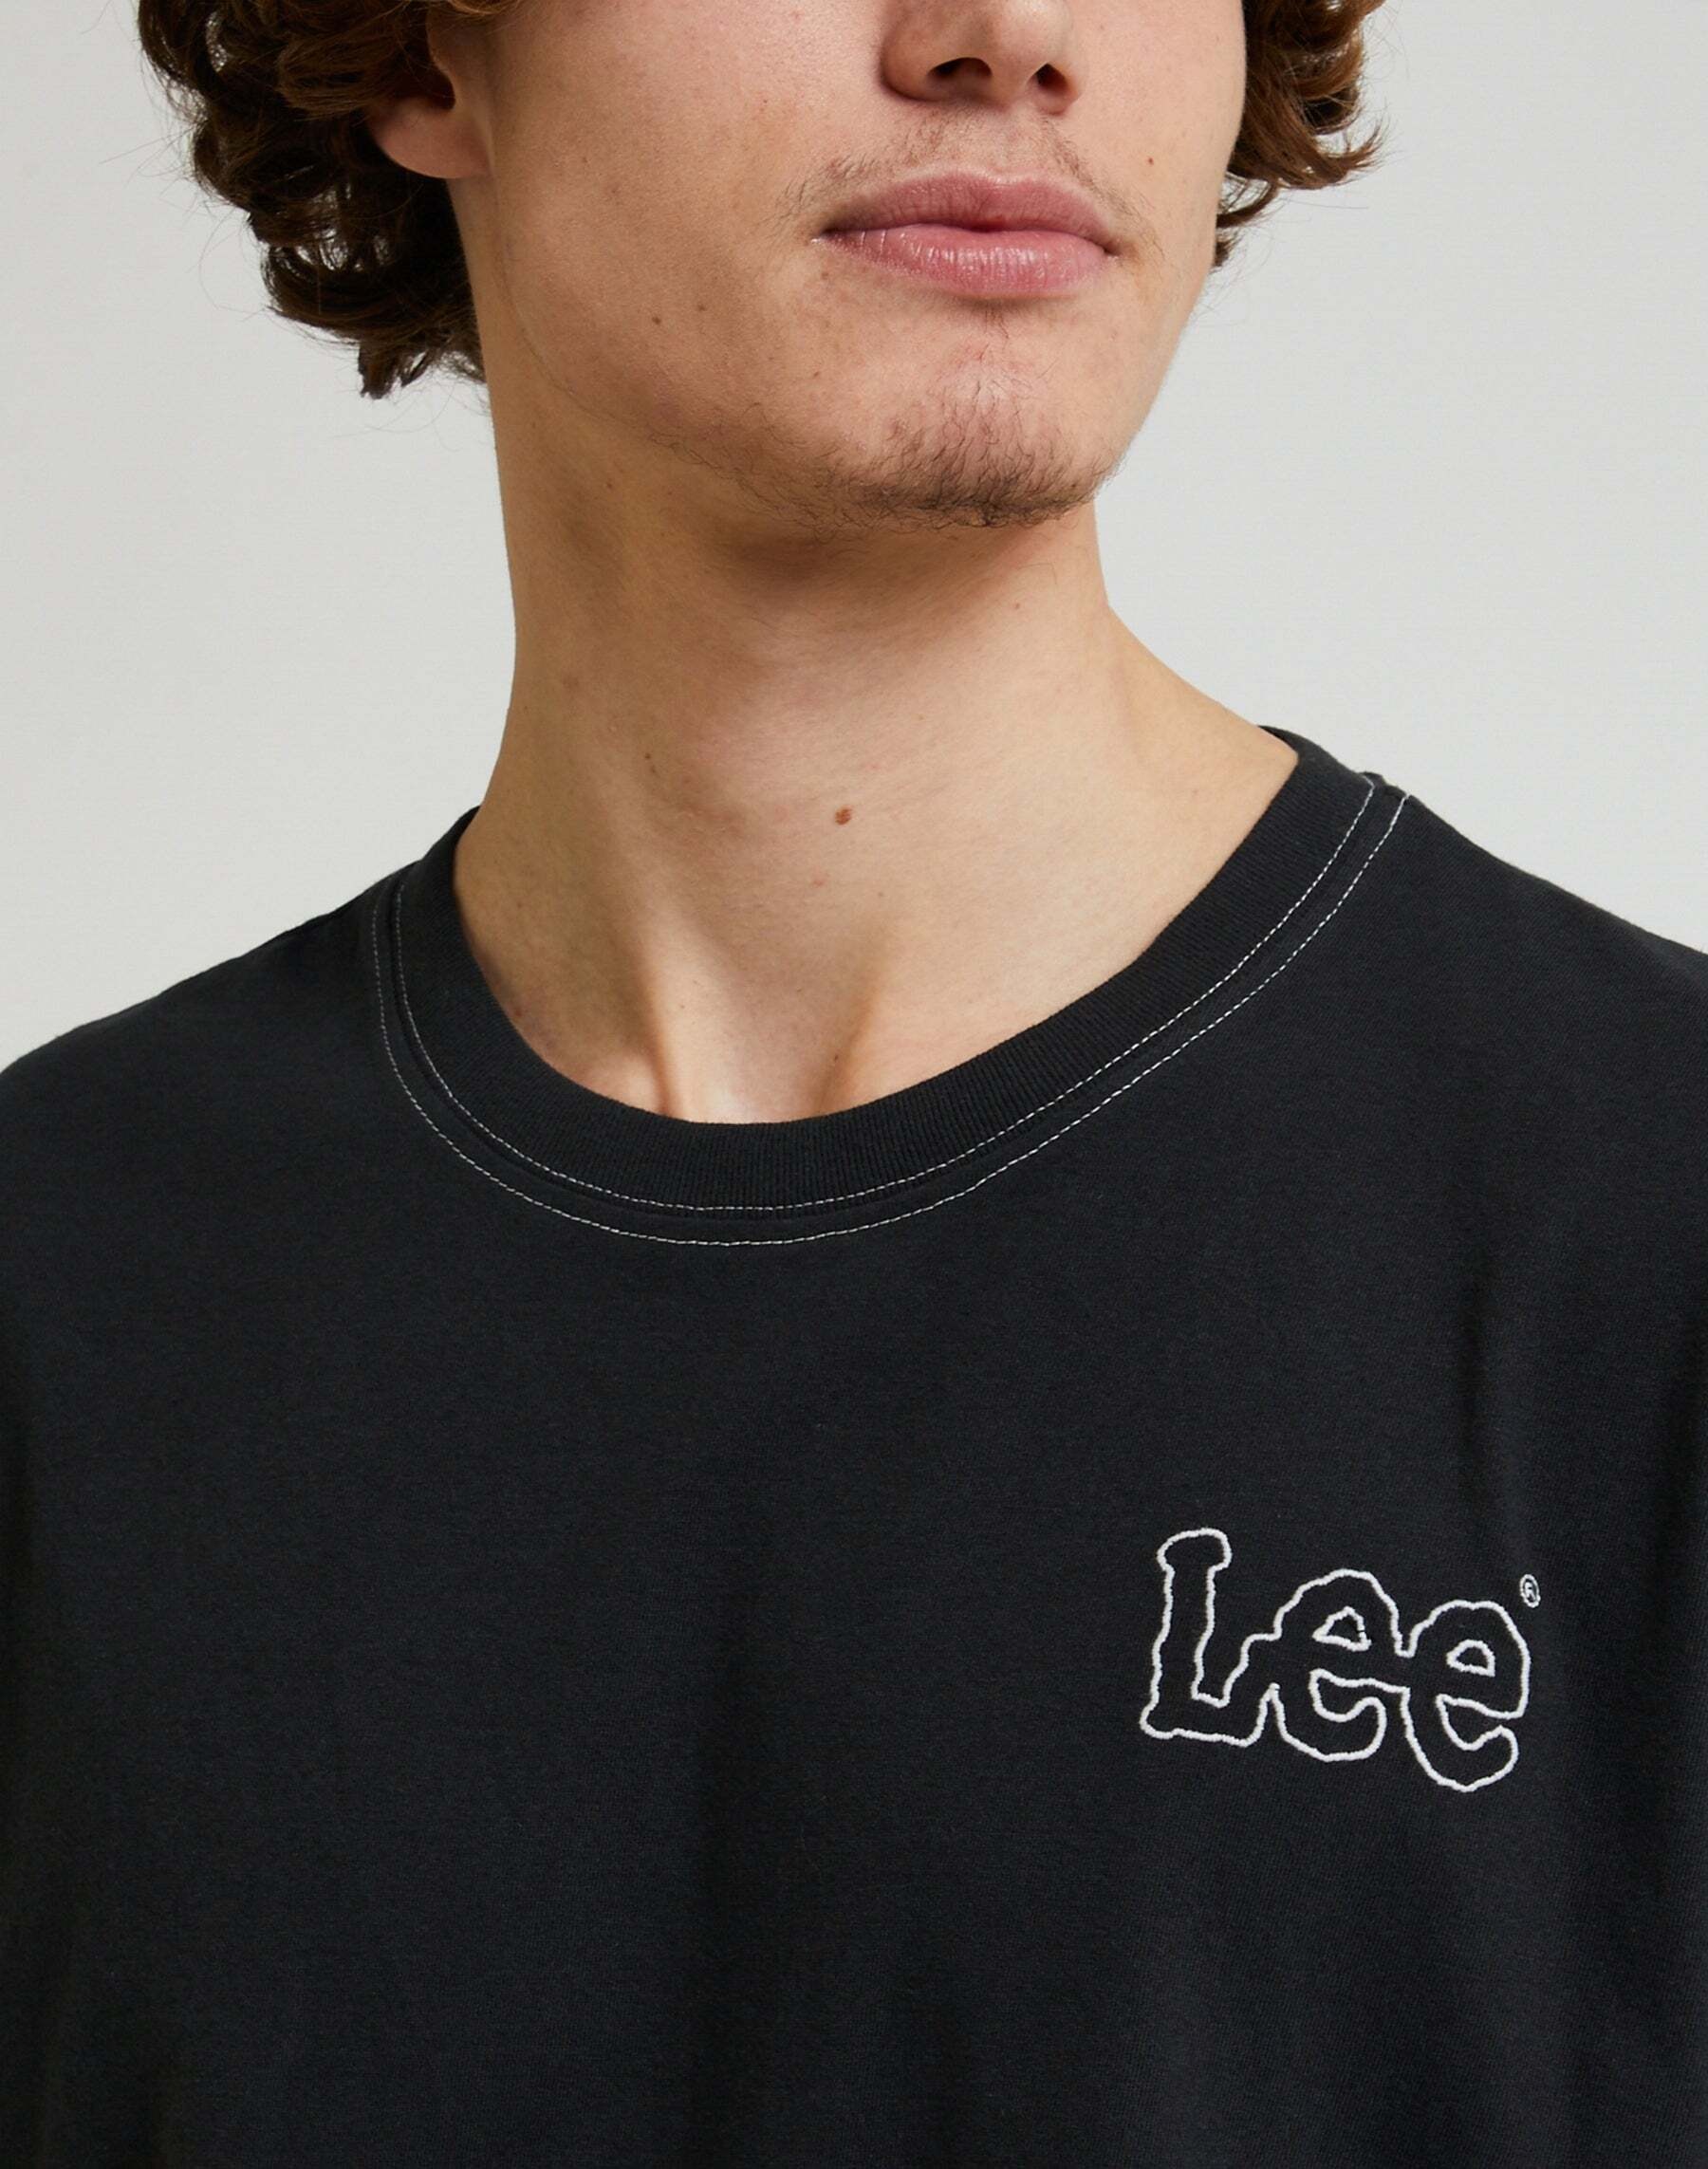 Lee® T-Shirt »TShirtsLooseSeasonalTee«